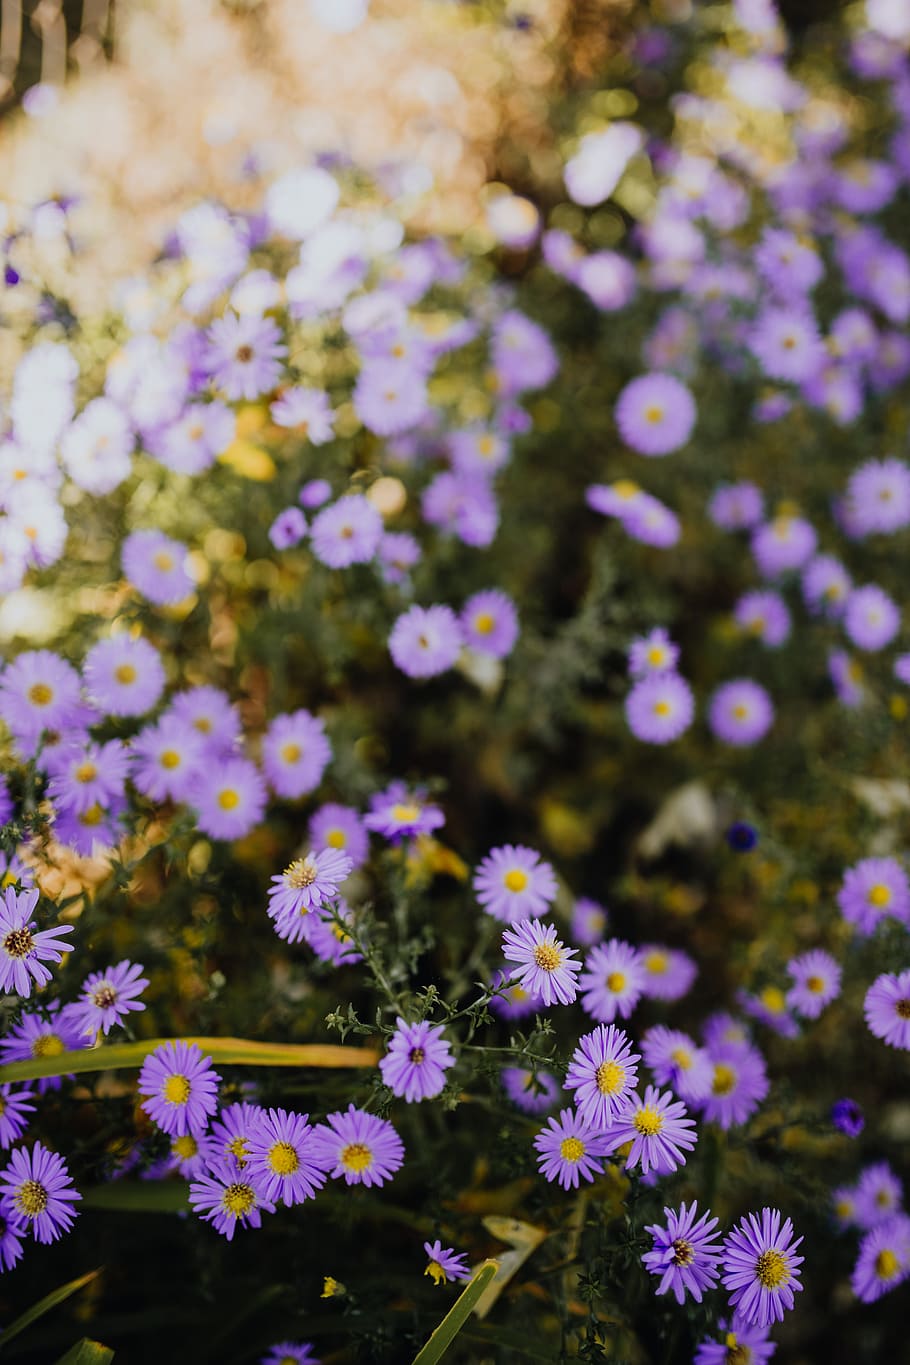 kecil, ungu, bunga, taman, bunga ungu, musim gugur, tanaman berbunga, tanaman, kesegaran, kerentanan